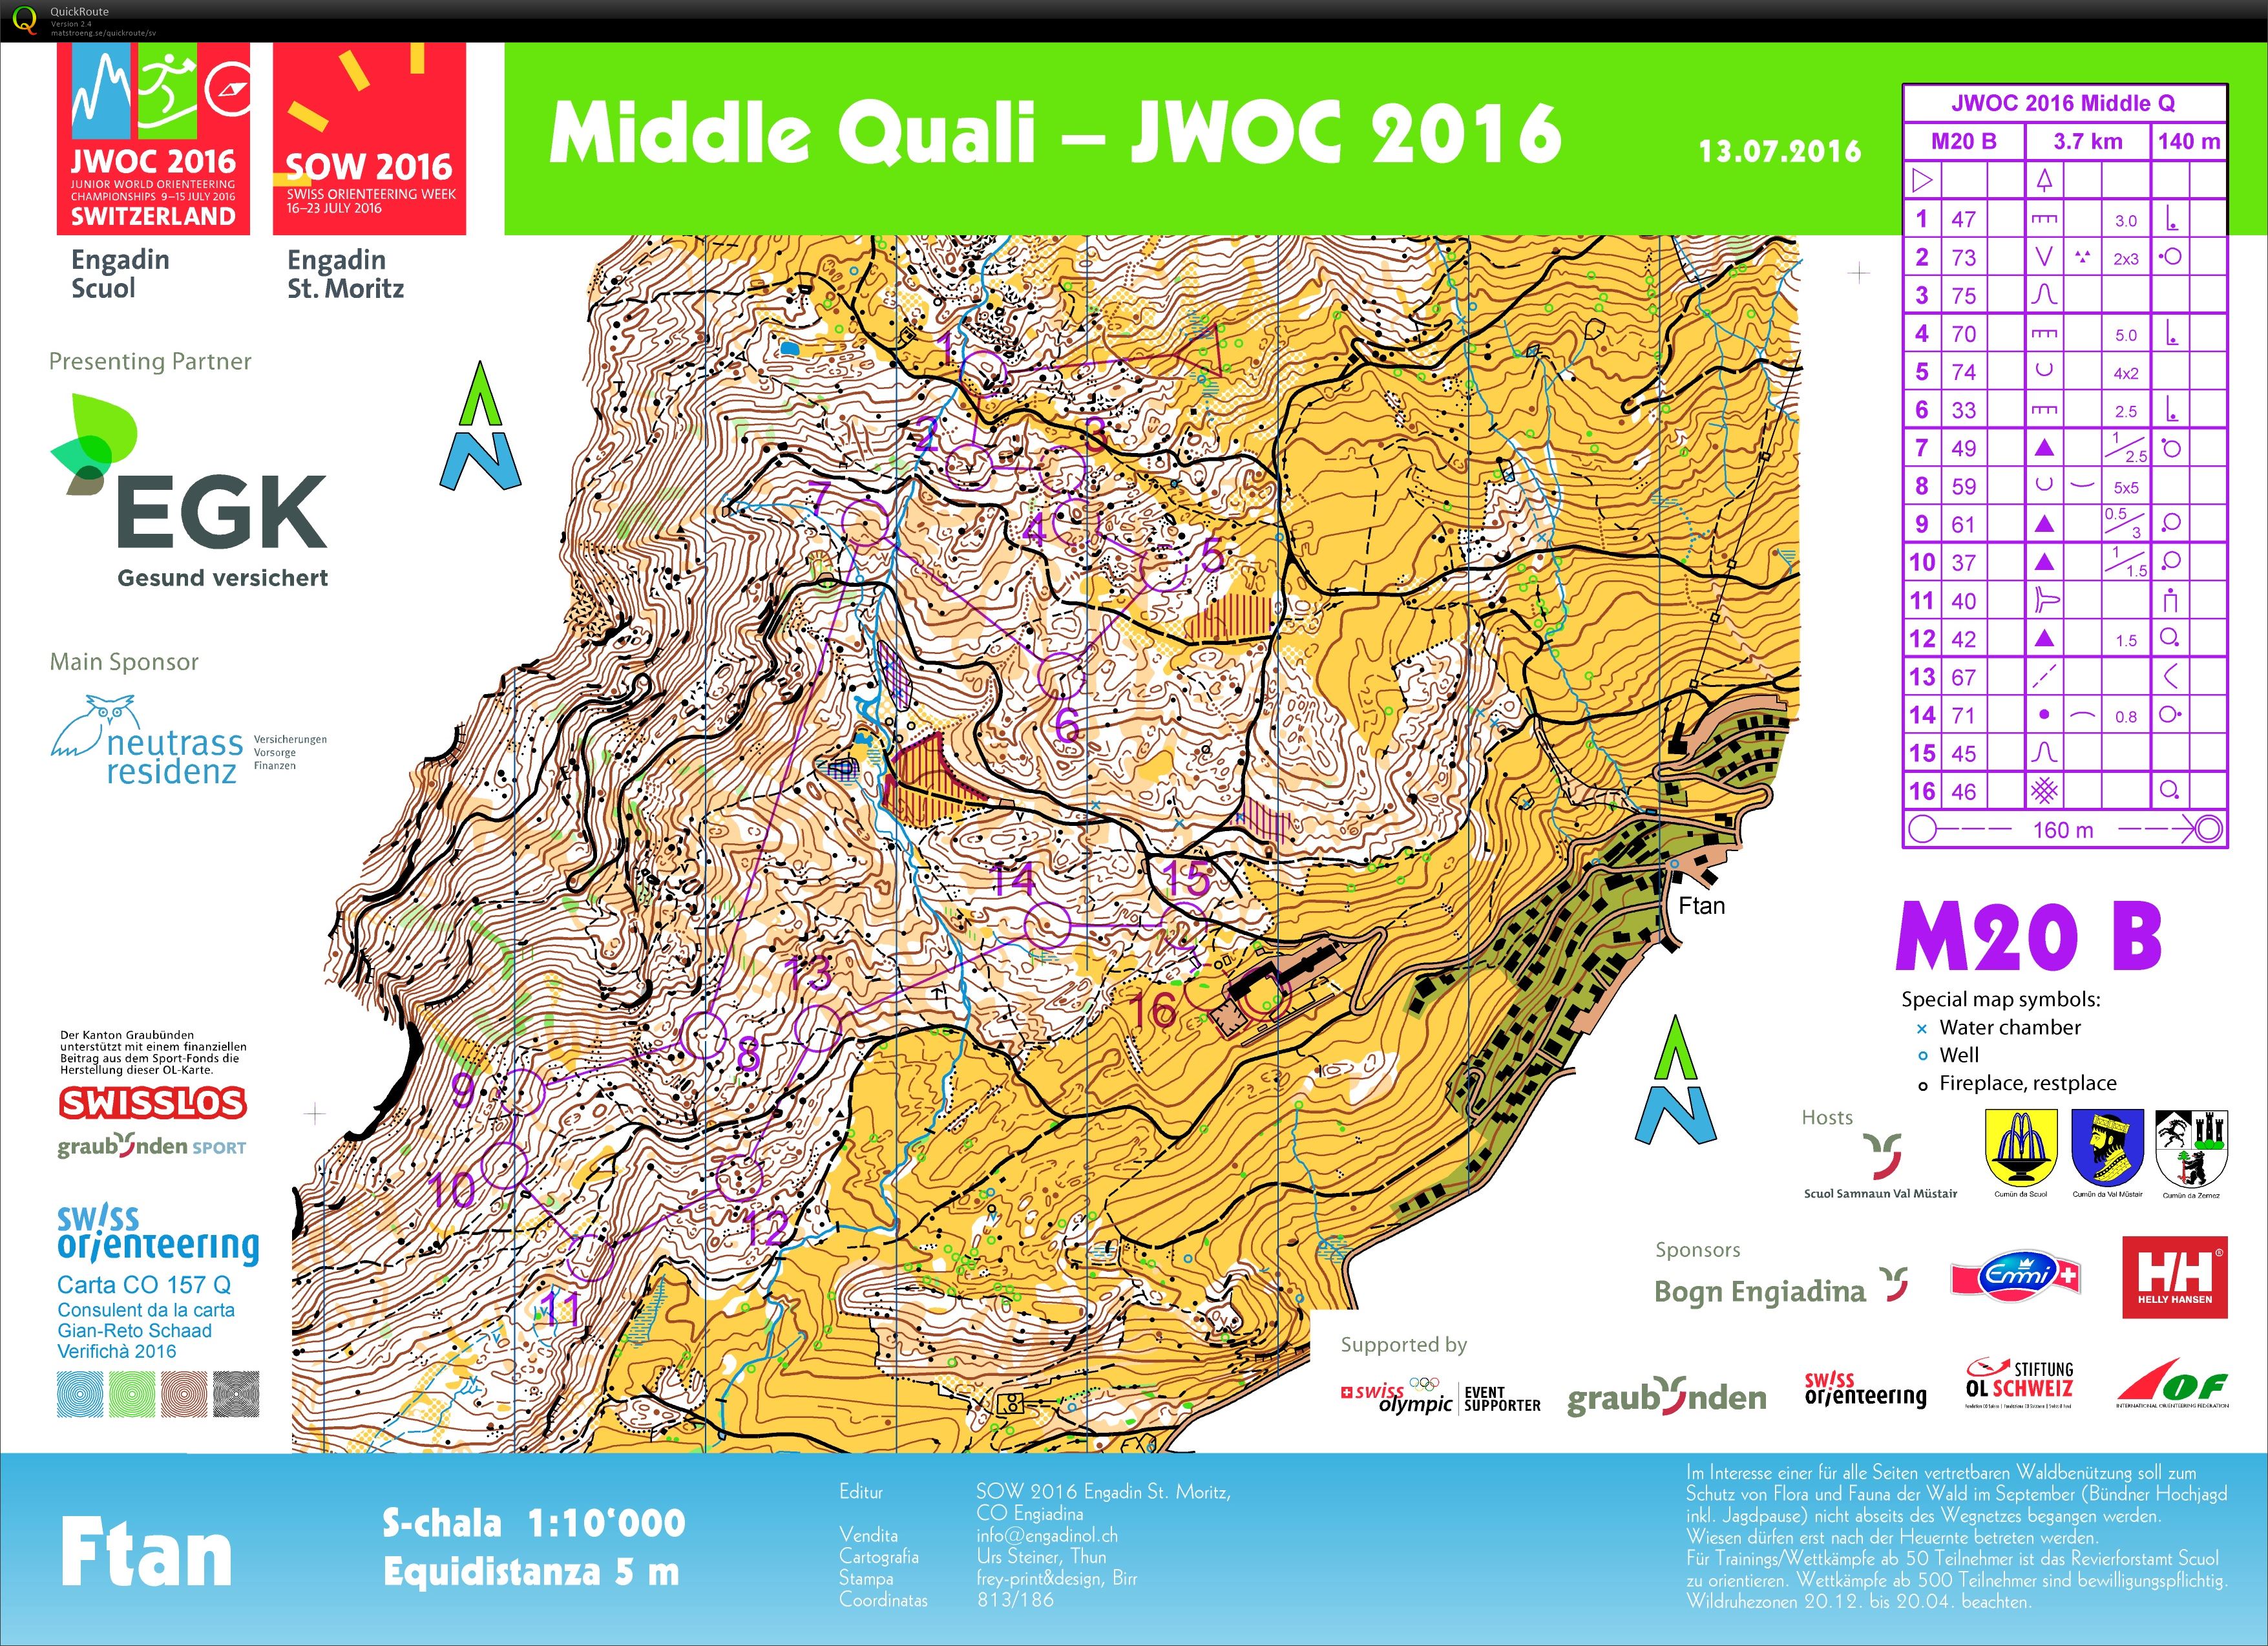 JWOC Middle Qualification heat B (13.07.2016)